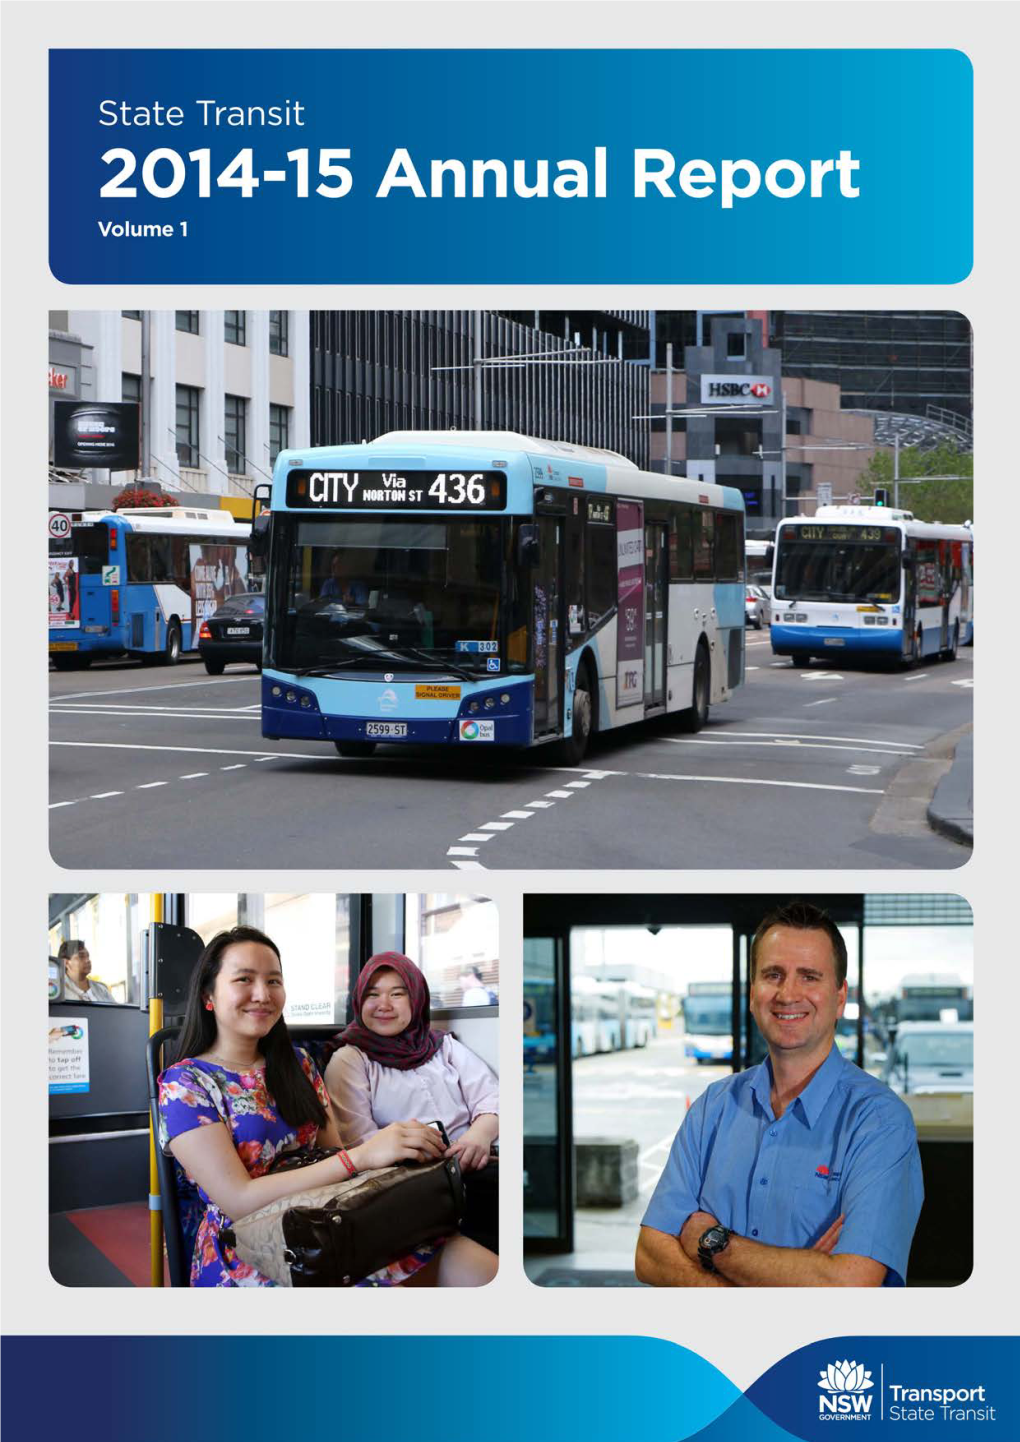 State Transit Annual Report 2014-15 Volume 1